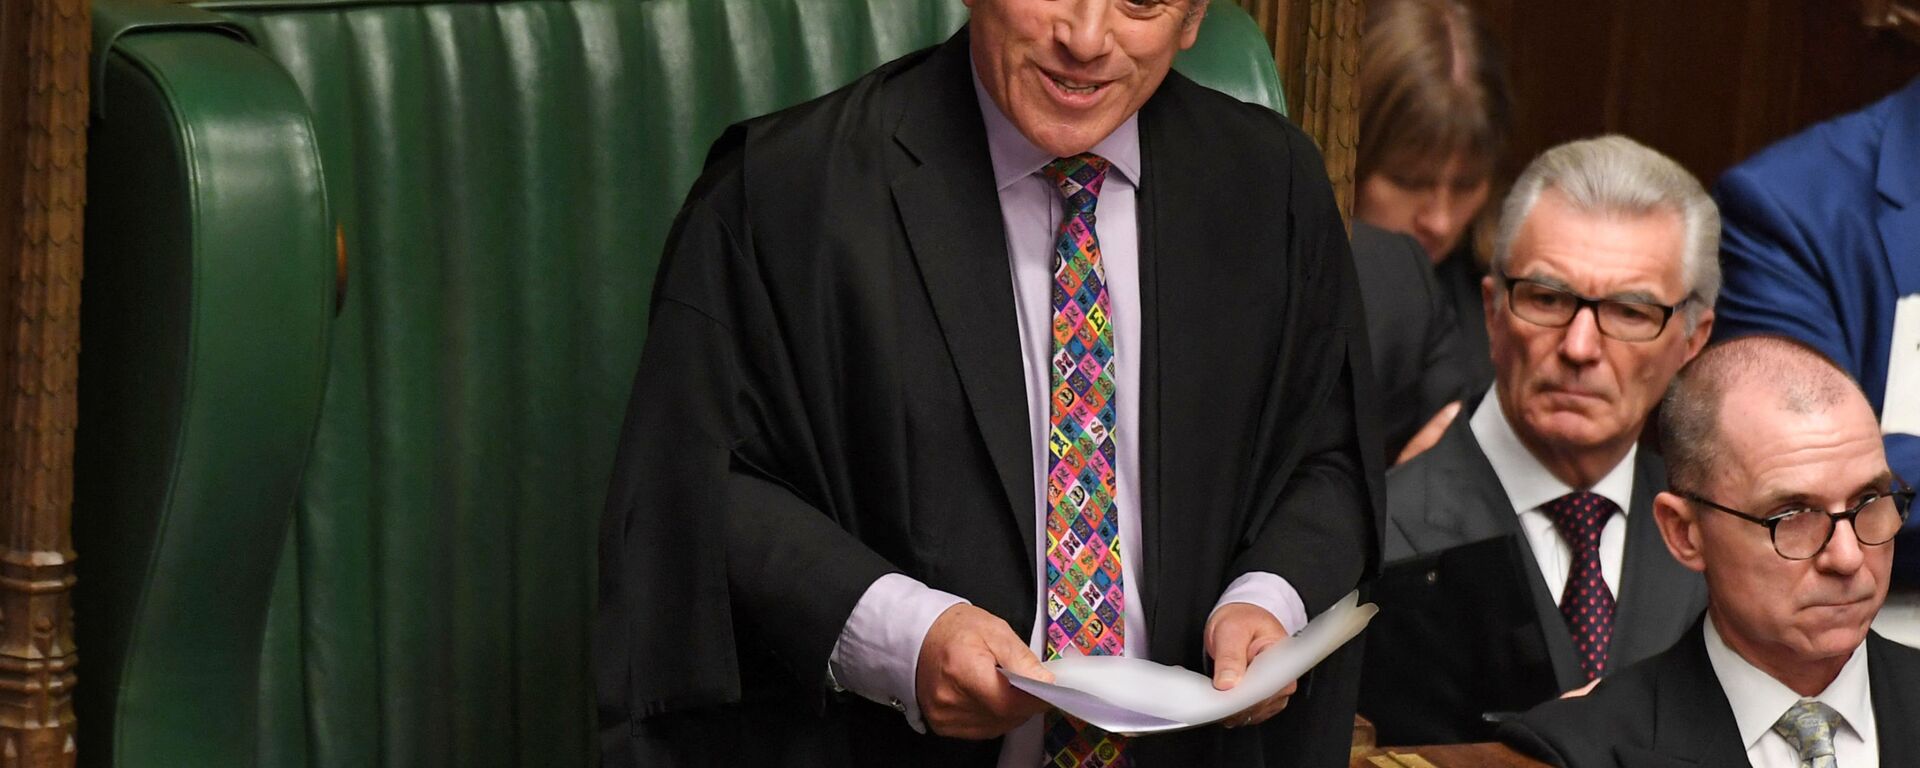 UK Parliament Speaker John Bercow smiling while speaking in the House of Commons in London on October 21, 2019 - Sputnik International, 1920, 20.06.2021